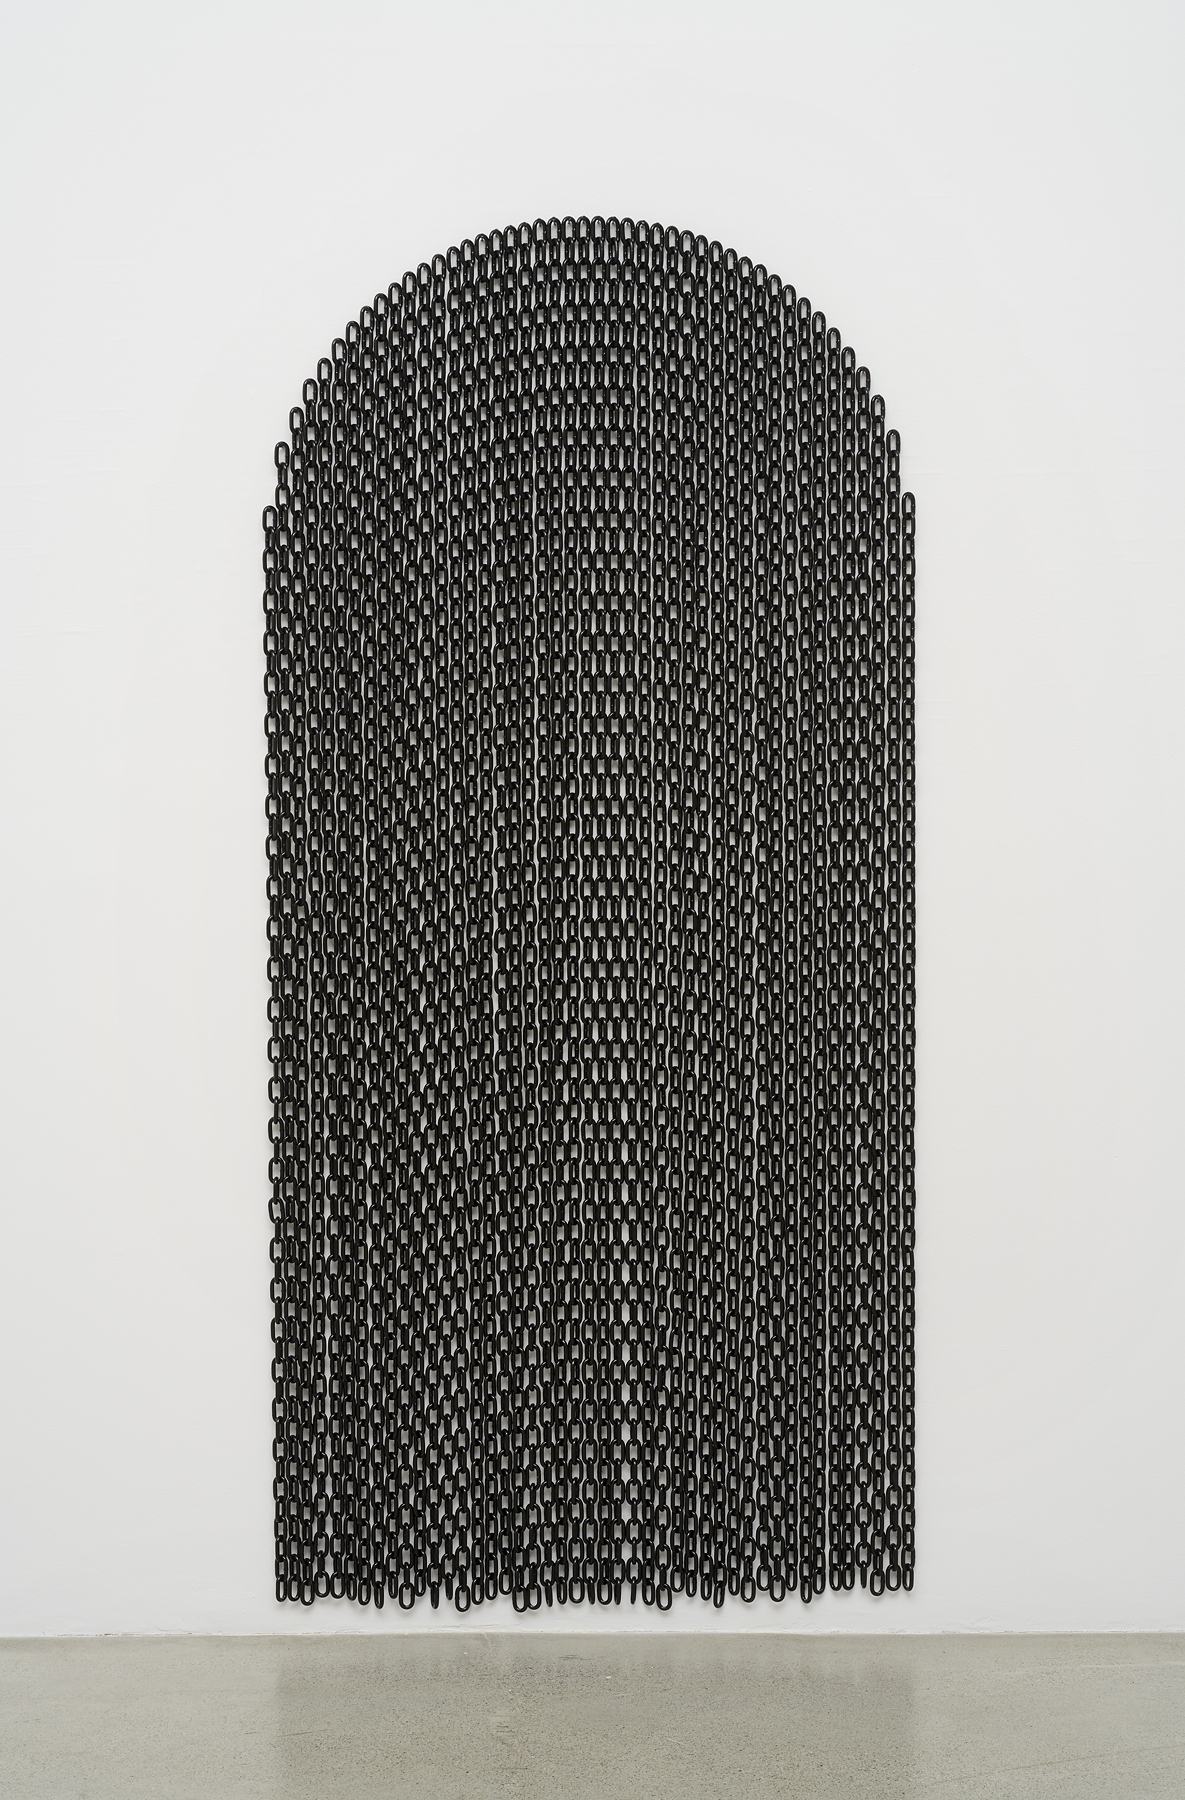  Davina Semo,  Threshold , 2019, Powder coated steel chain and hardware, 85 x 40 inches / 215.9 x 101.6 cm 